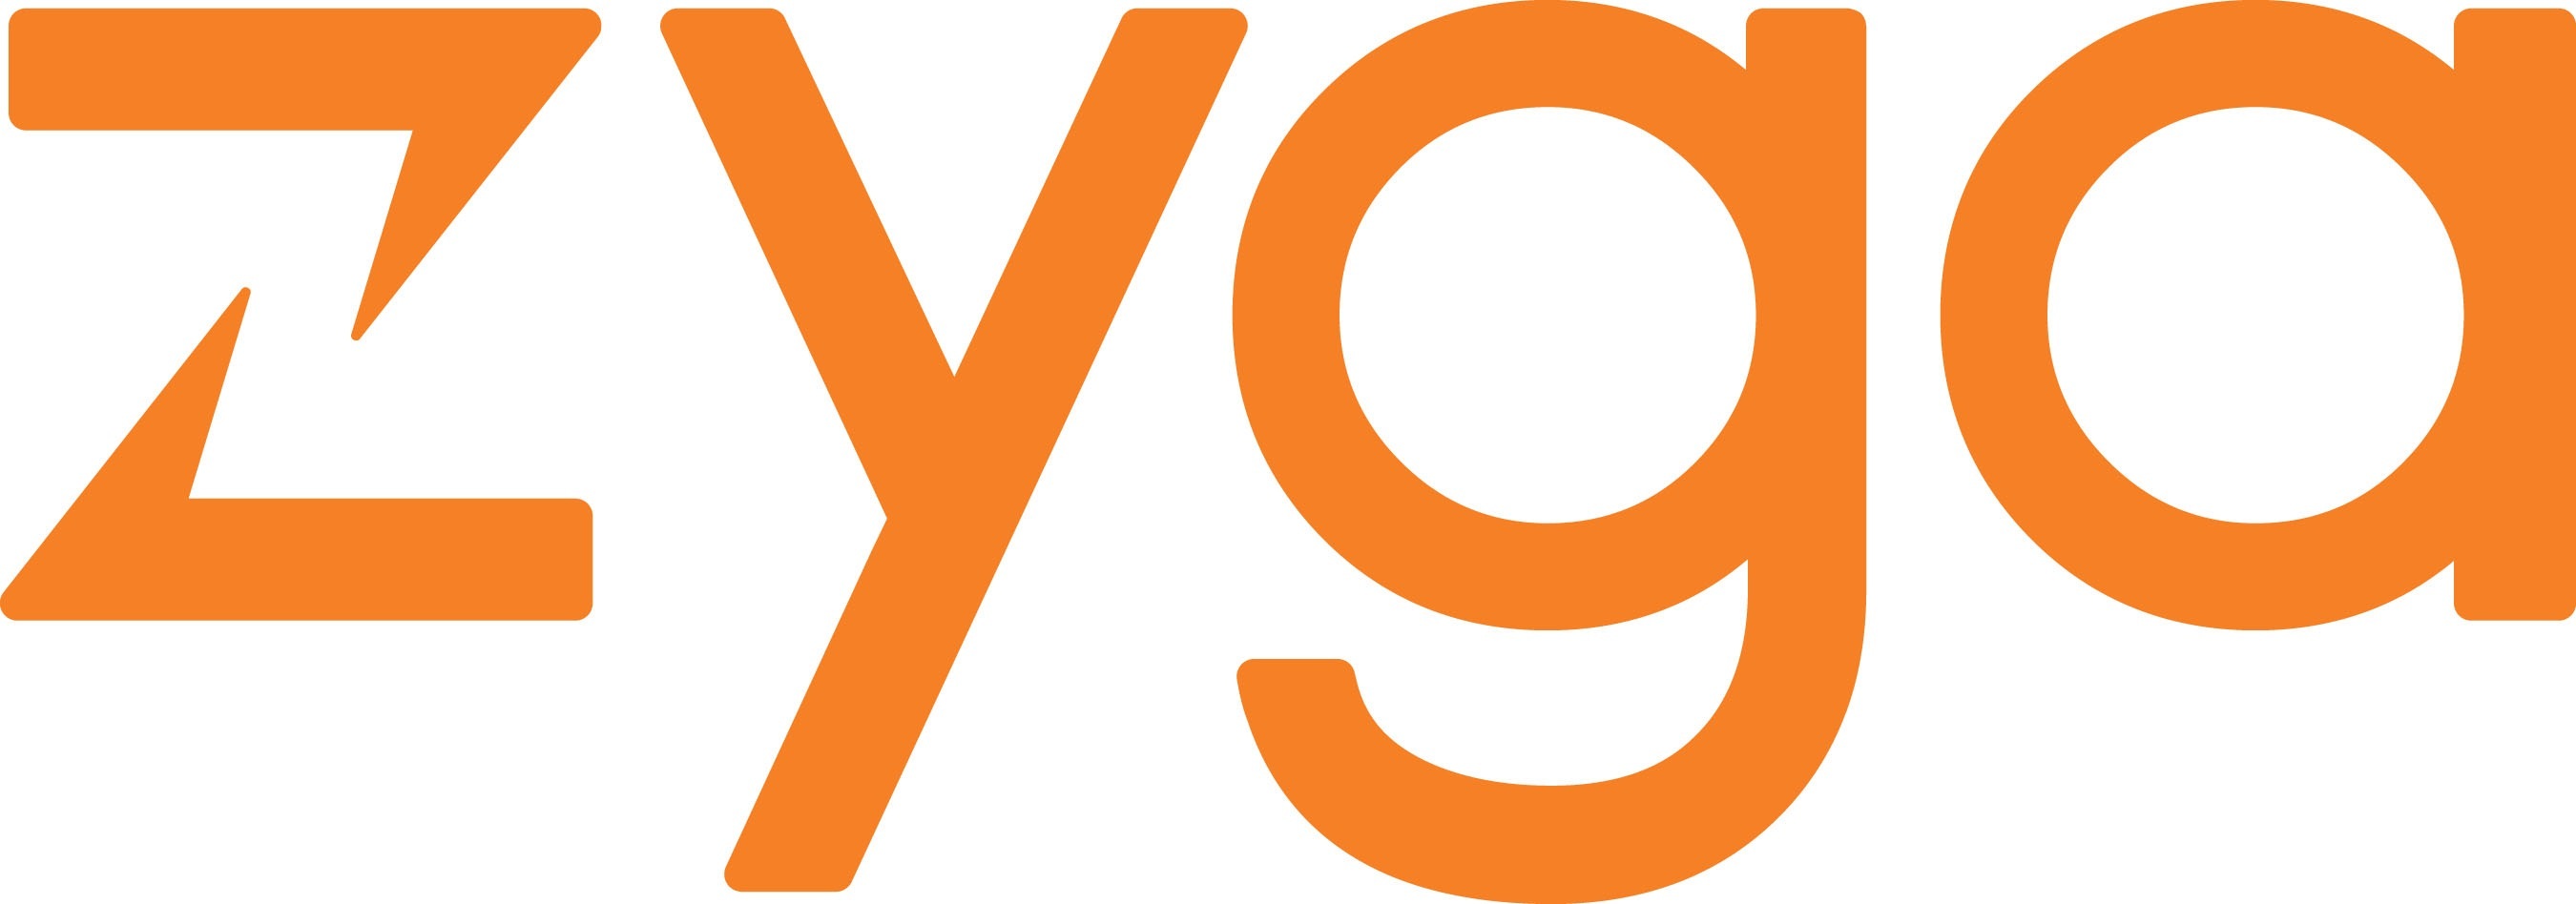 Zyga - Logo